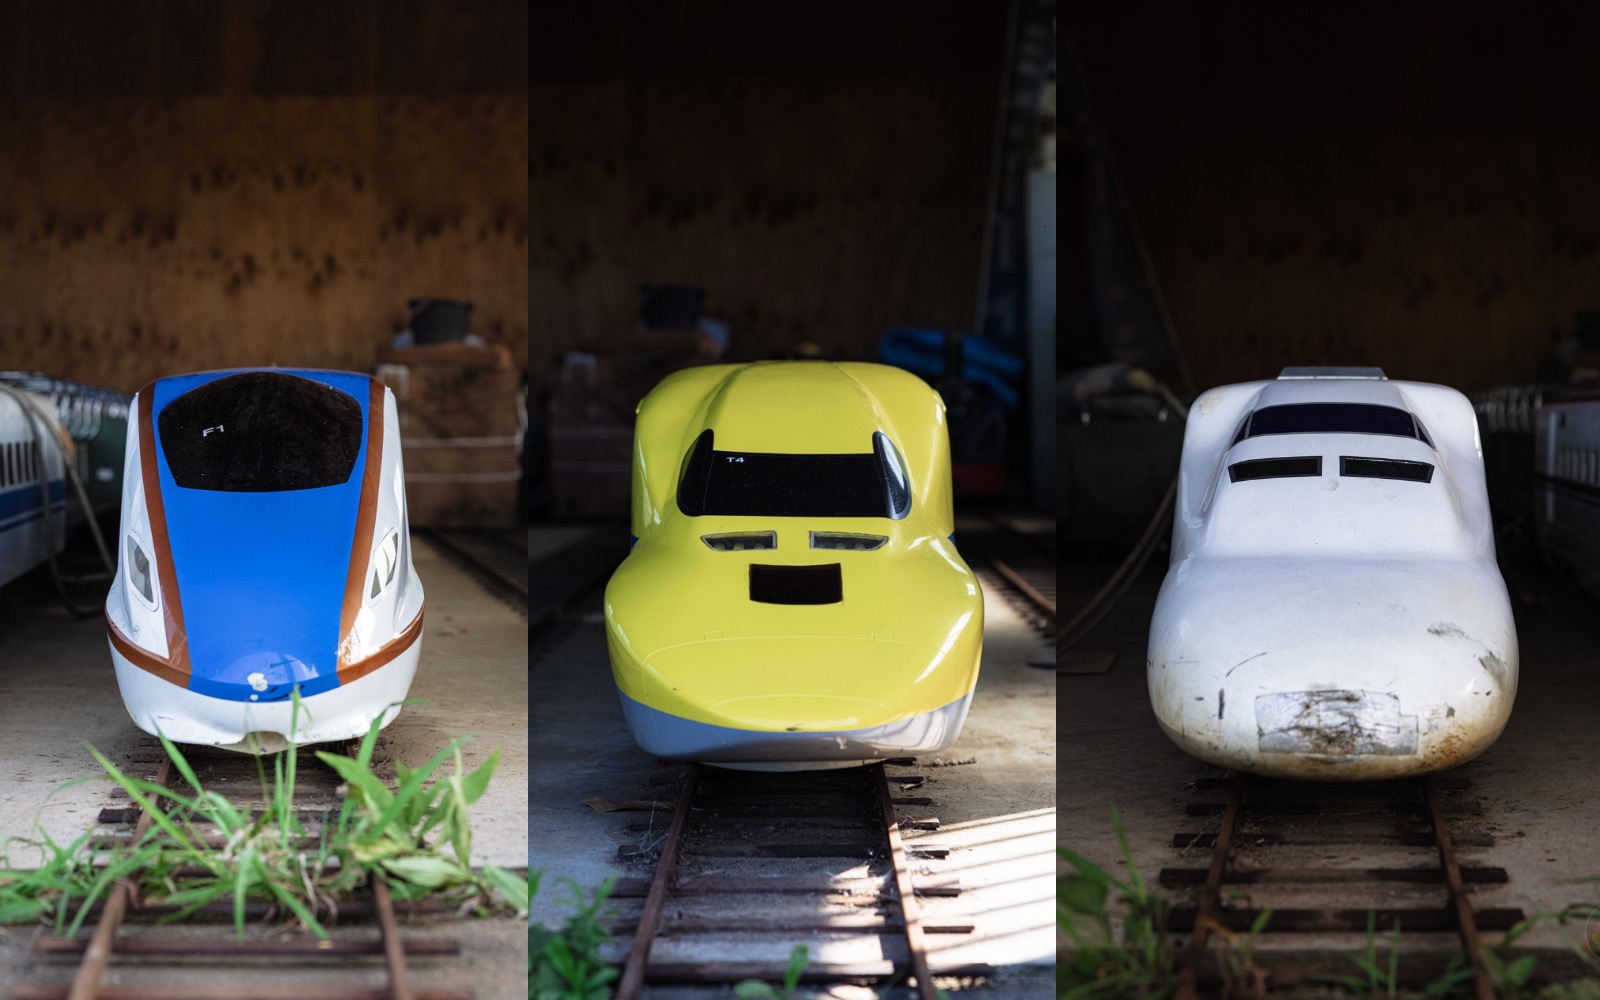 The Mini trains